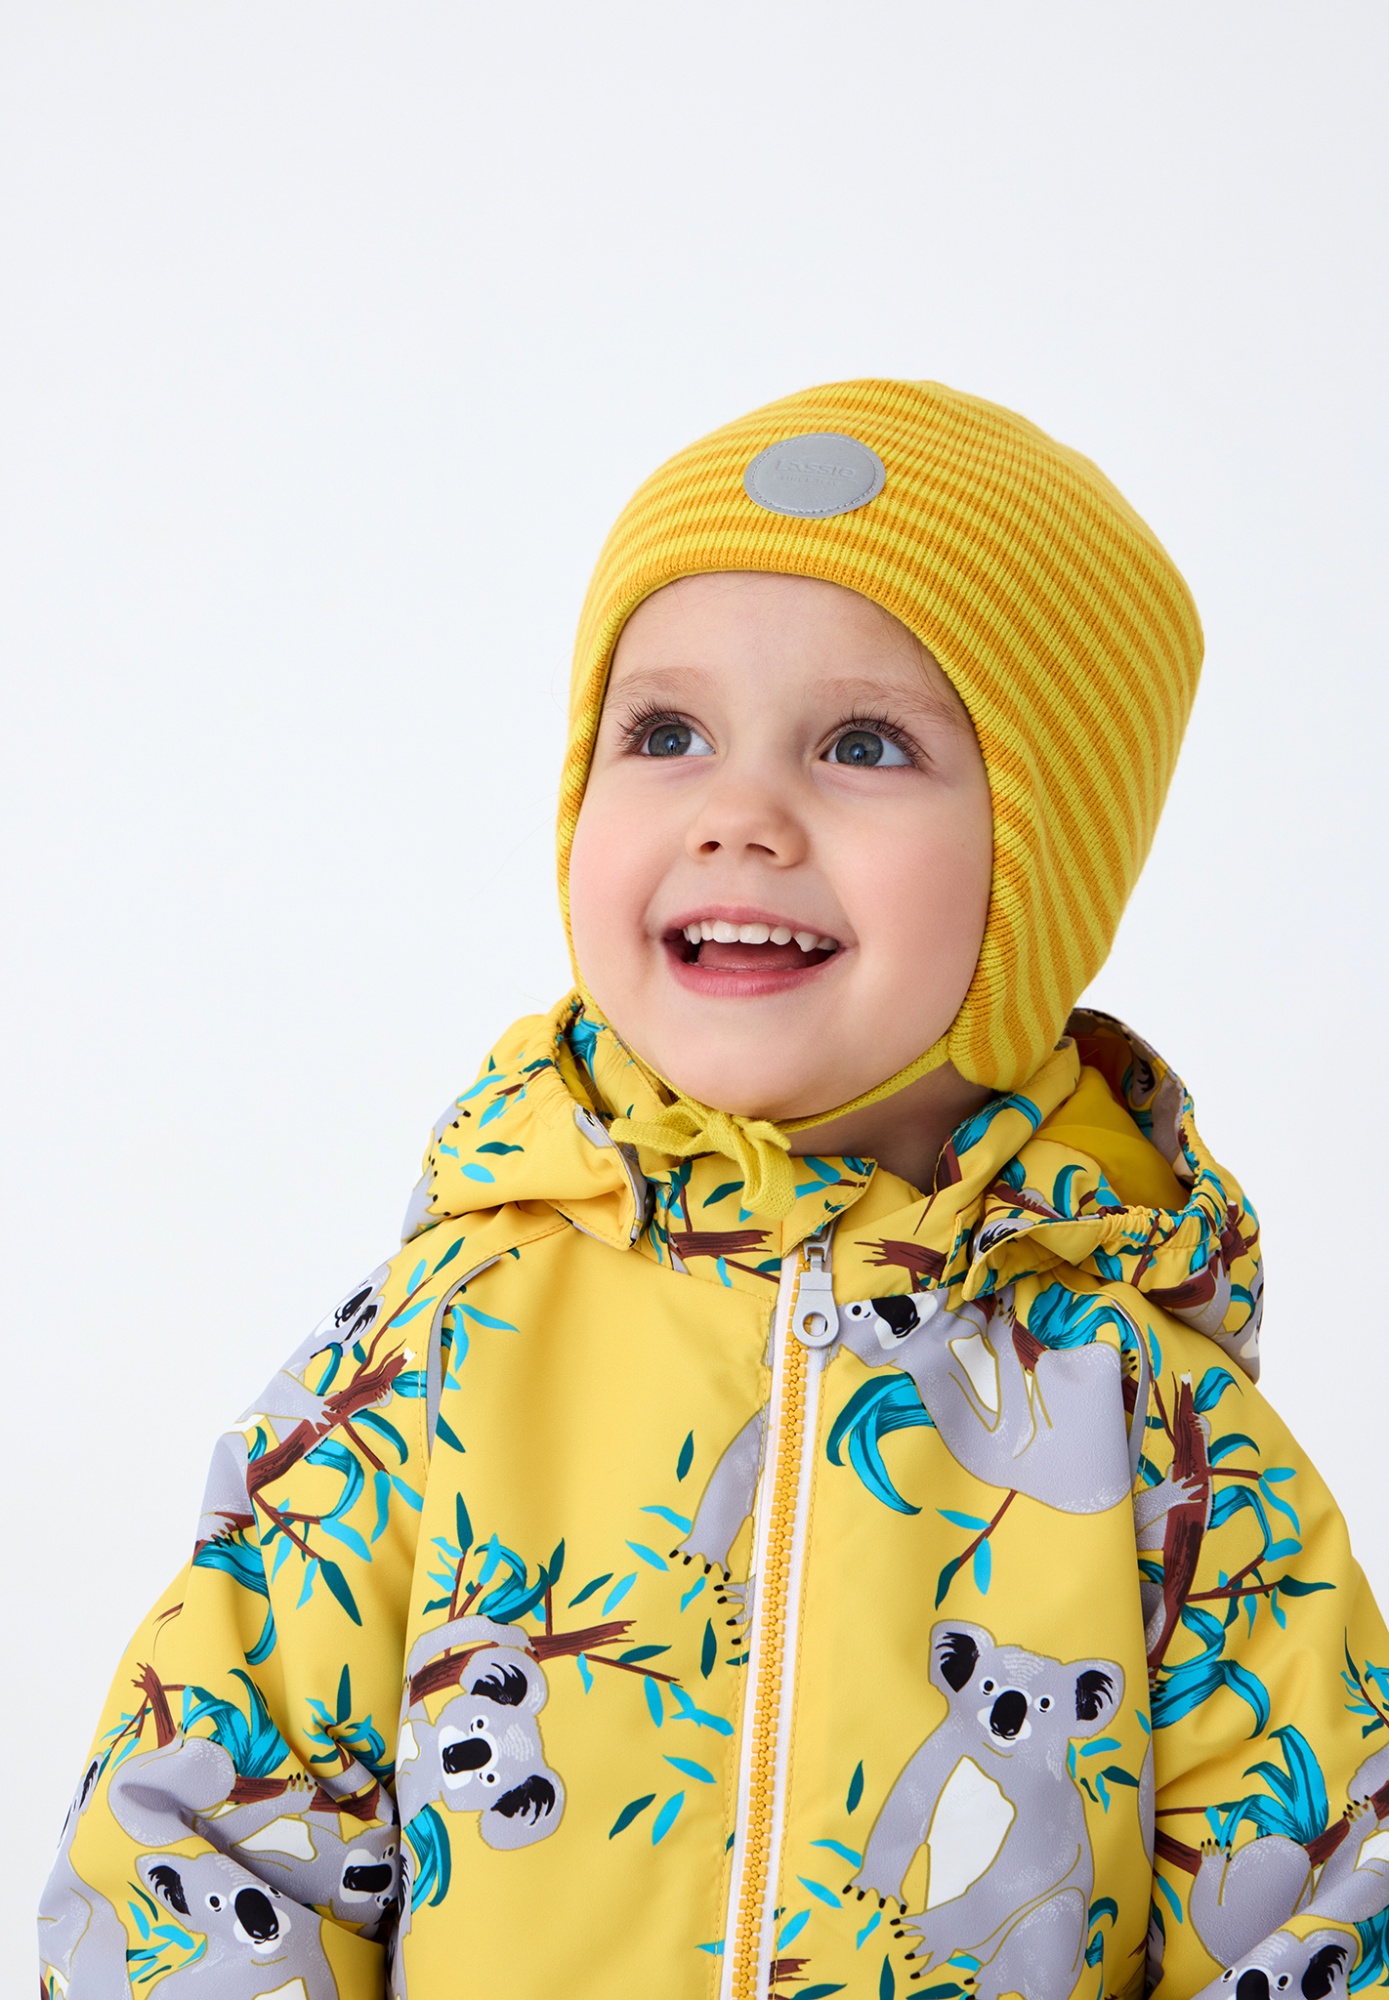 Детская шапка-бини Lassie Kivi Желтая | фото